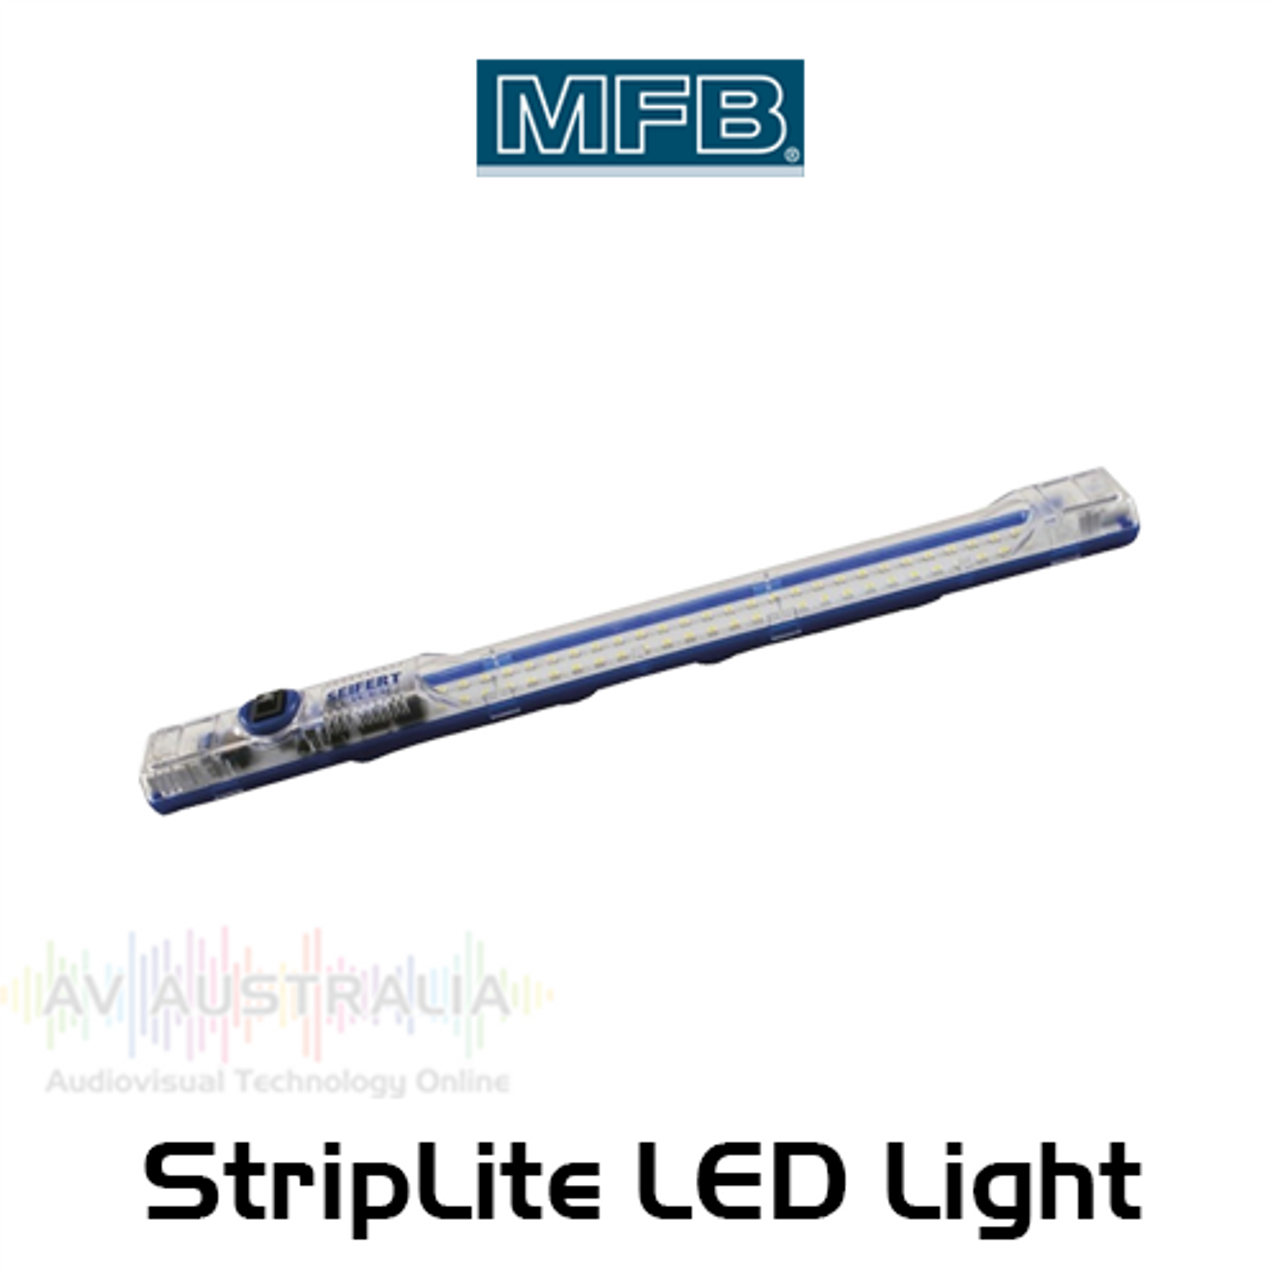 MFB Seifert Striplite LED Lighting